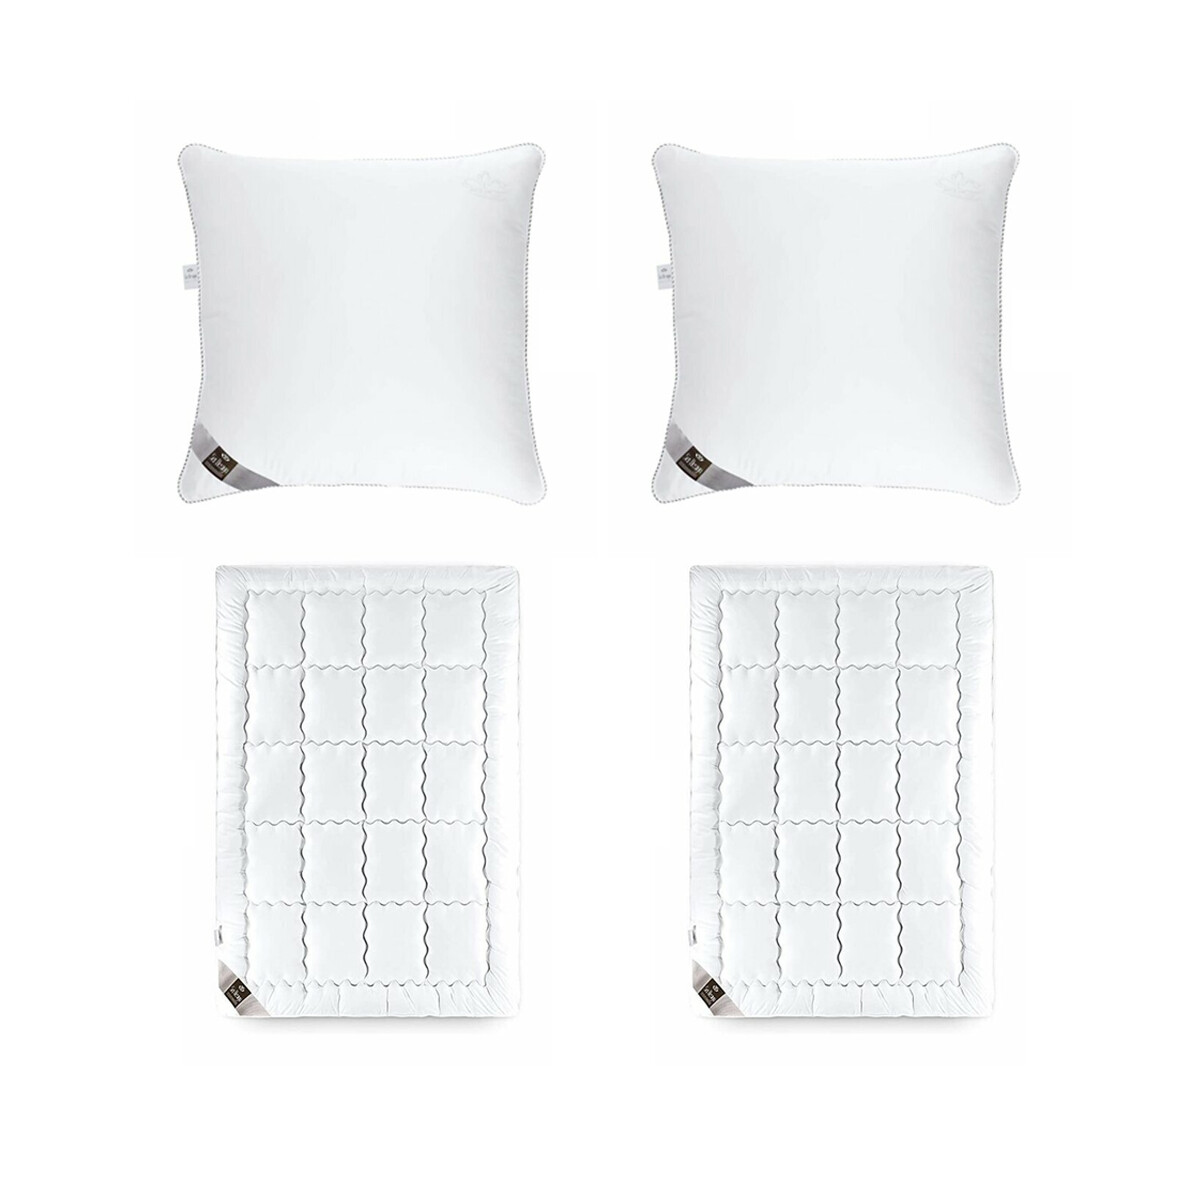 Hochwertige Bettdecken günstig bestellen - Sei Design, 179,90 €